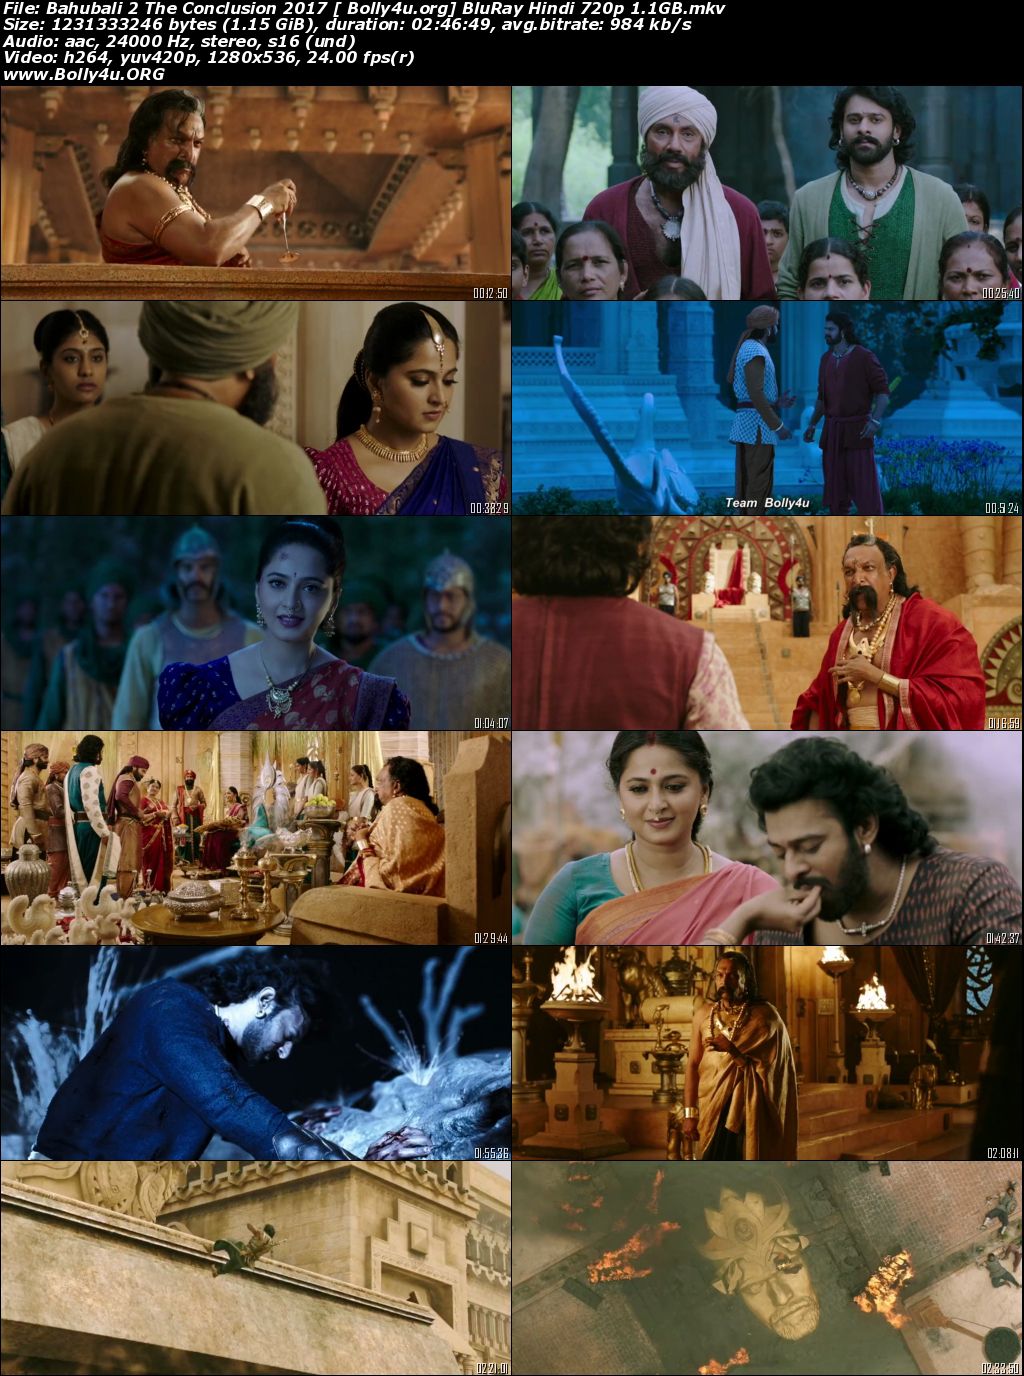 Bahubali 2 The Conclusion 2017 BluRay 1.1GB Hindi Movie Download 720p